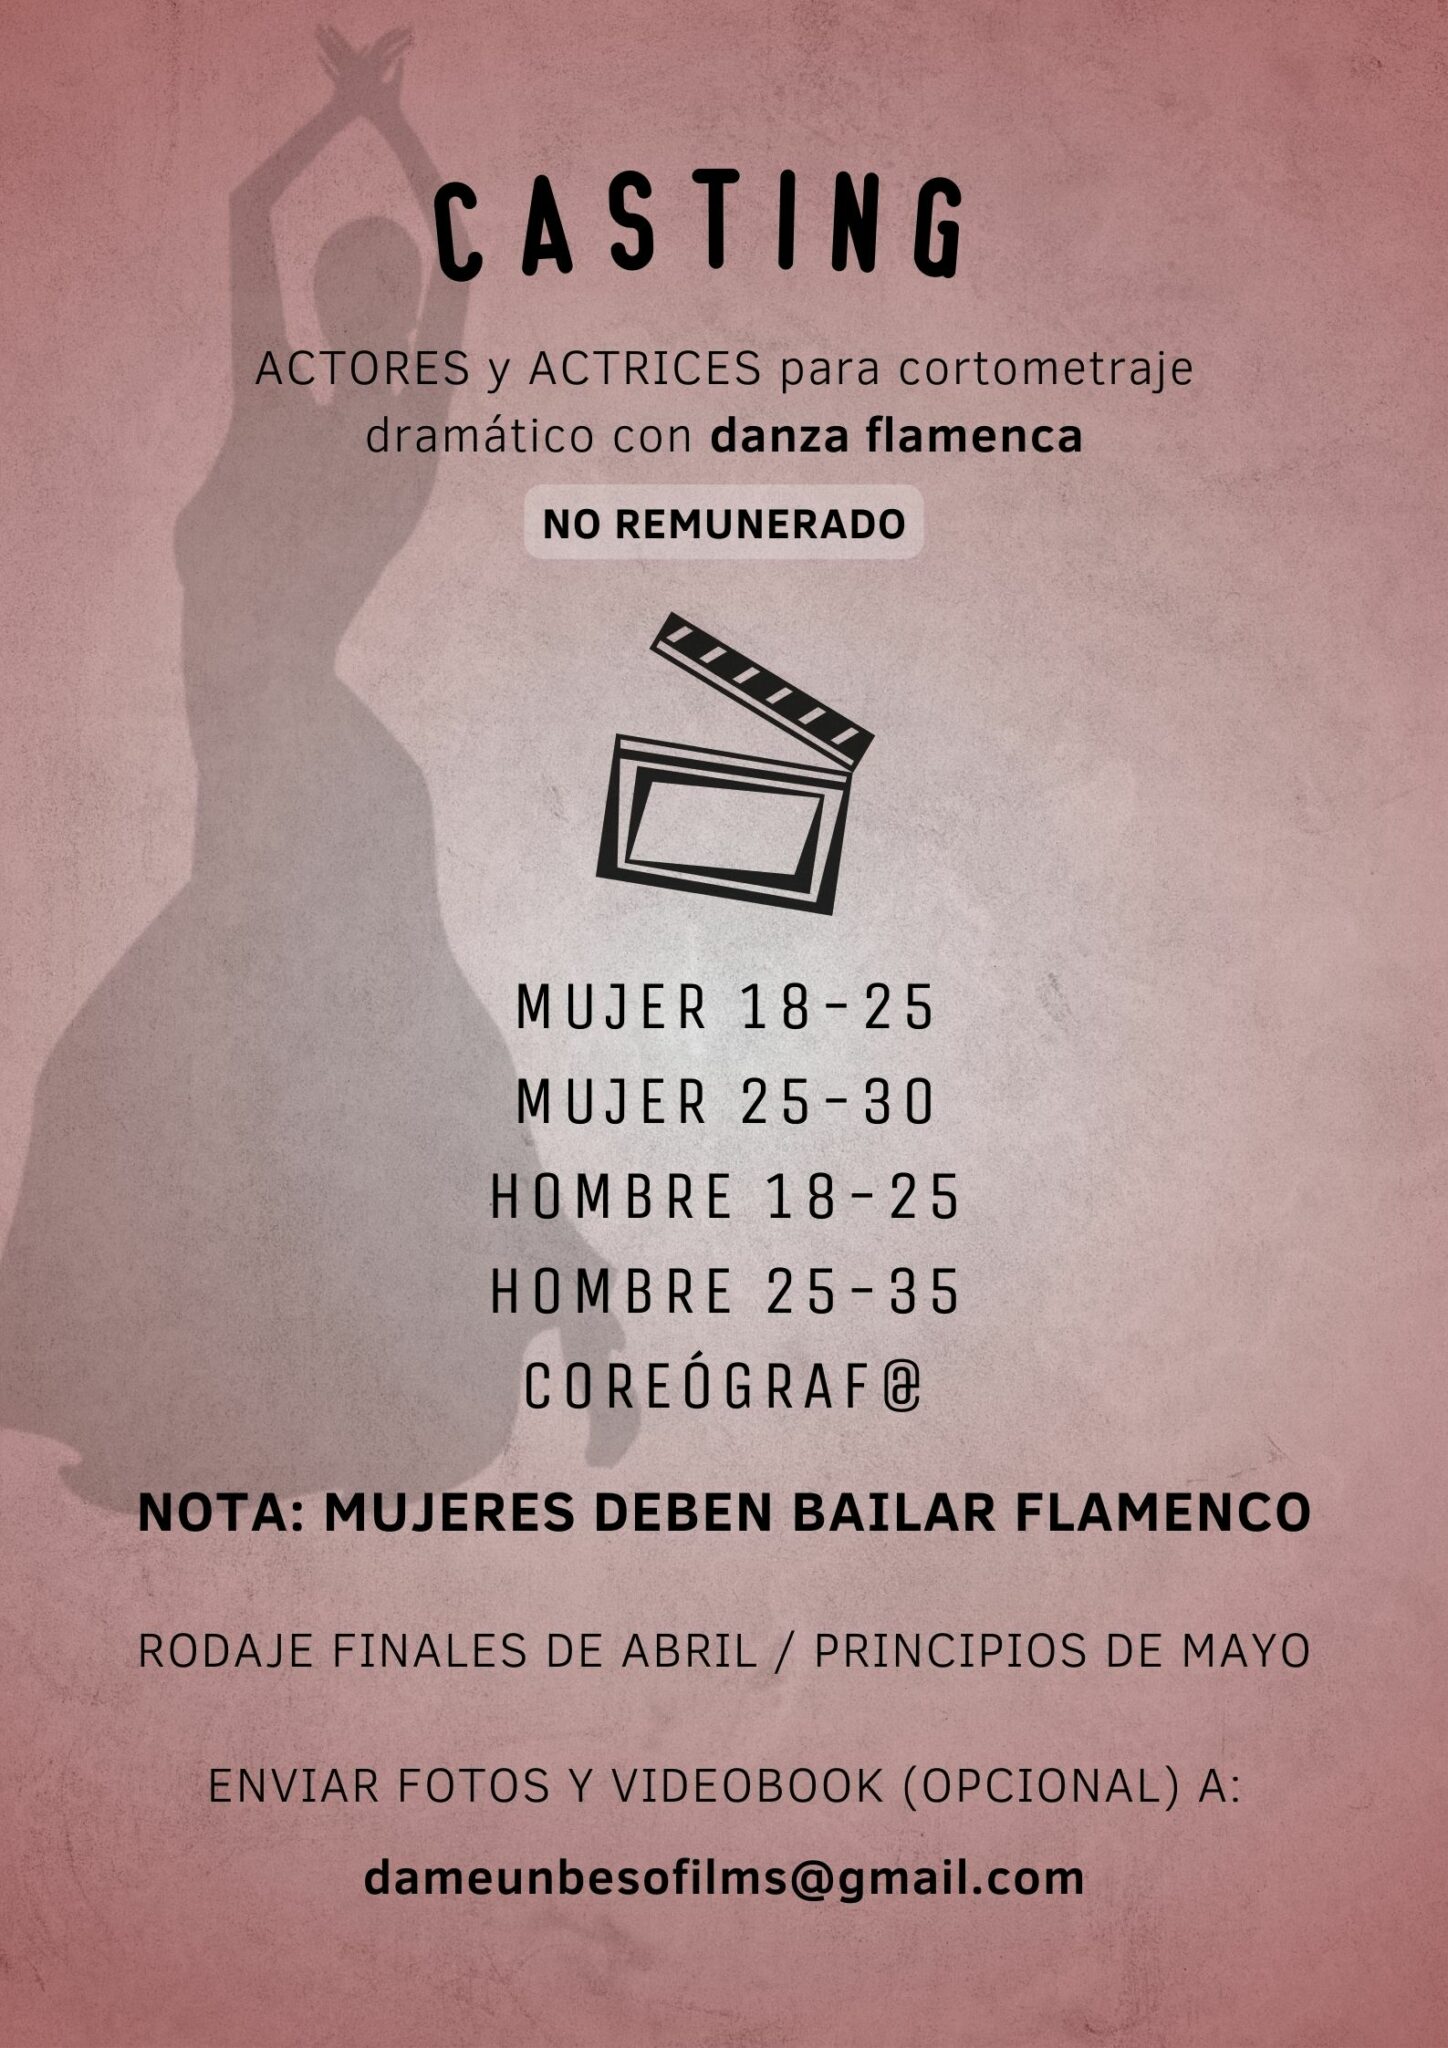 Casting cortometraje dramático con danza flamenca